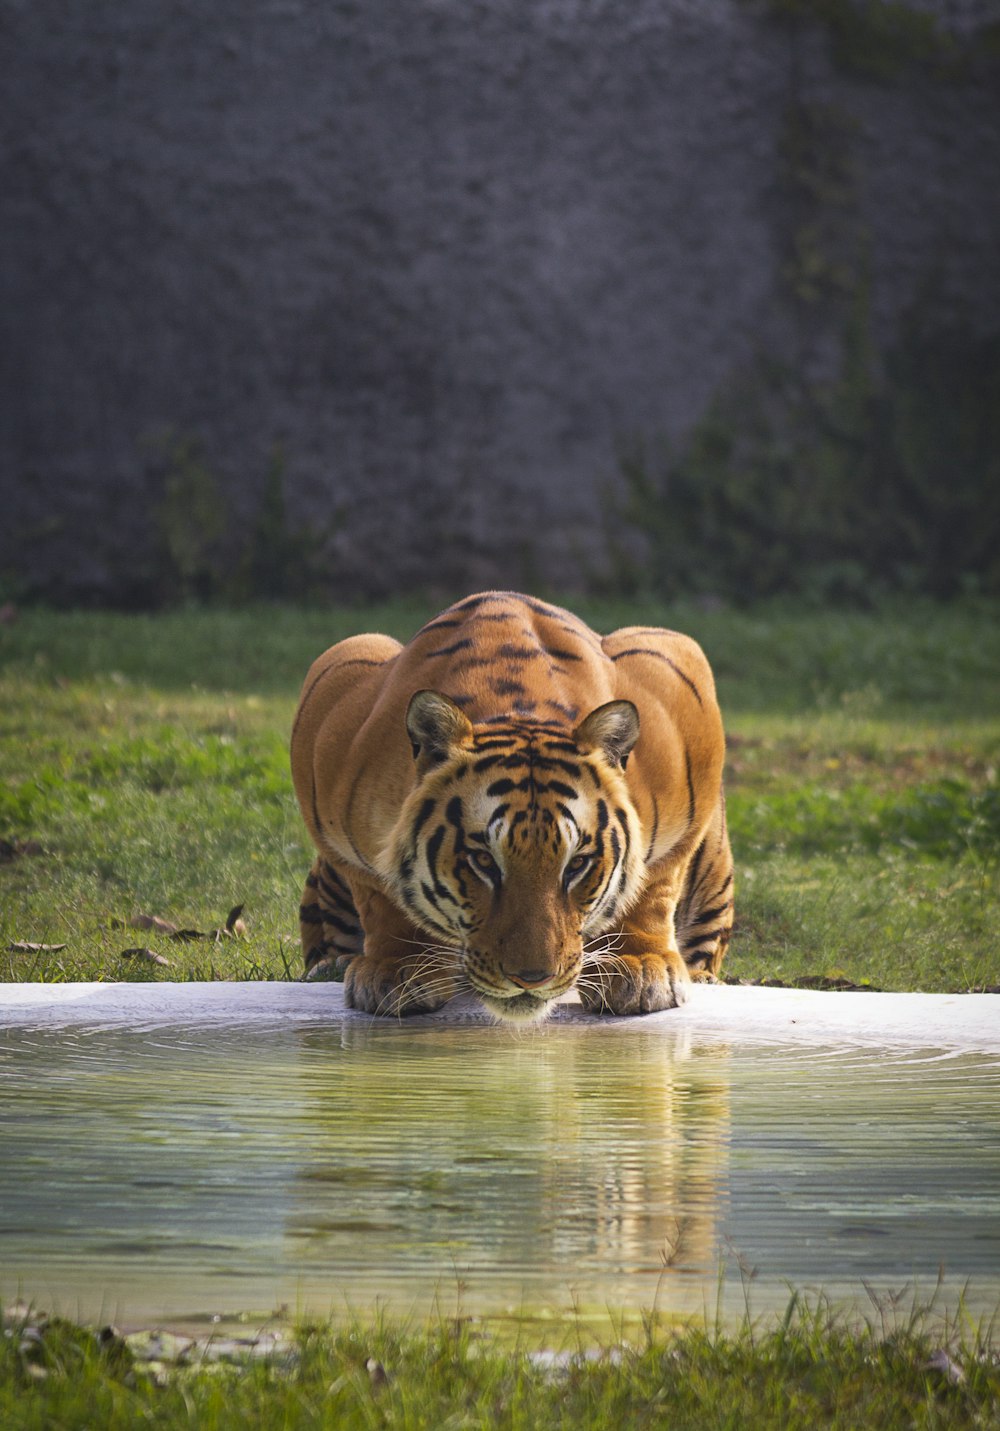 Royal Bengal Tiger Pictures | Download Free Images on Unsplash